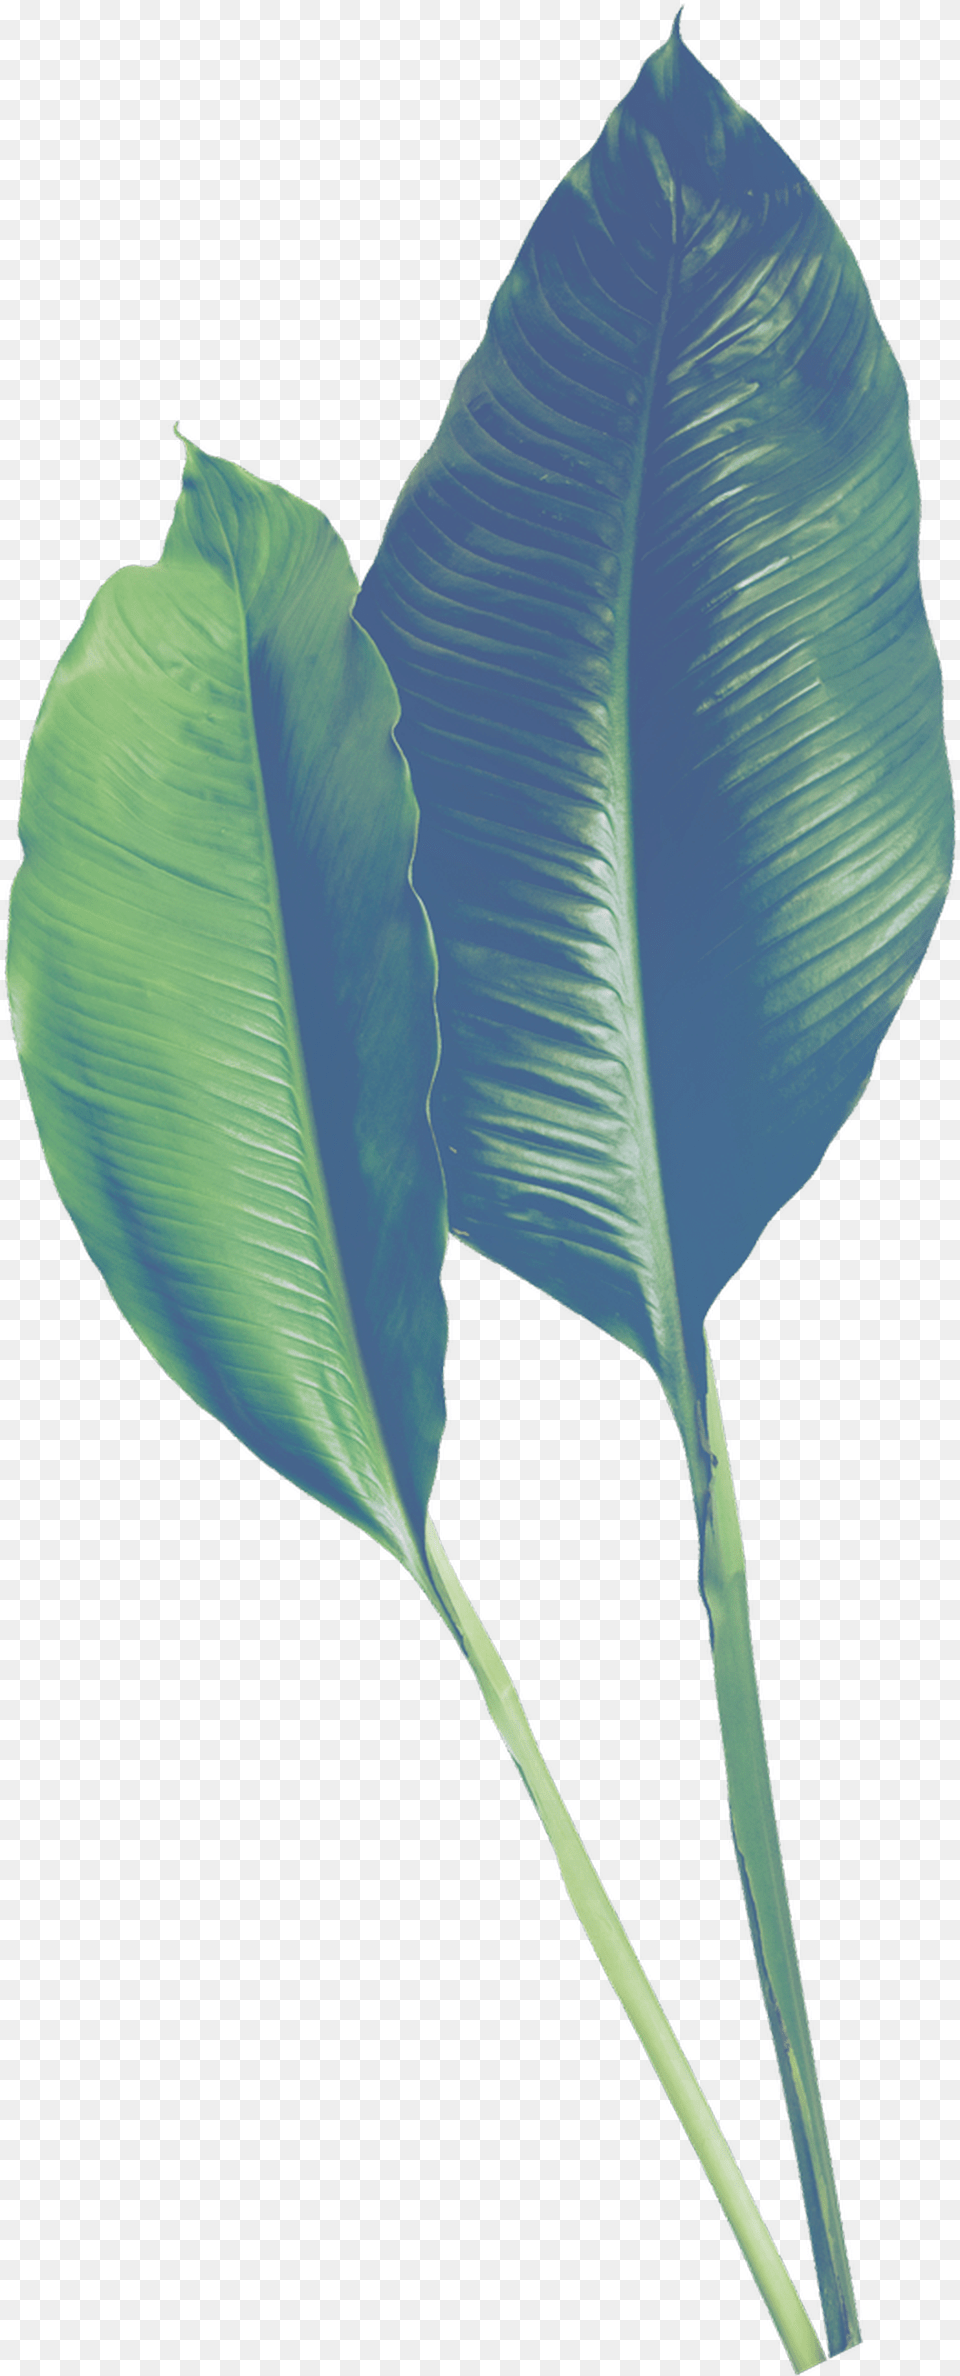 Hand Painted Realistic Banana Leaf Transparent Leaf, Plant Png Image